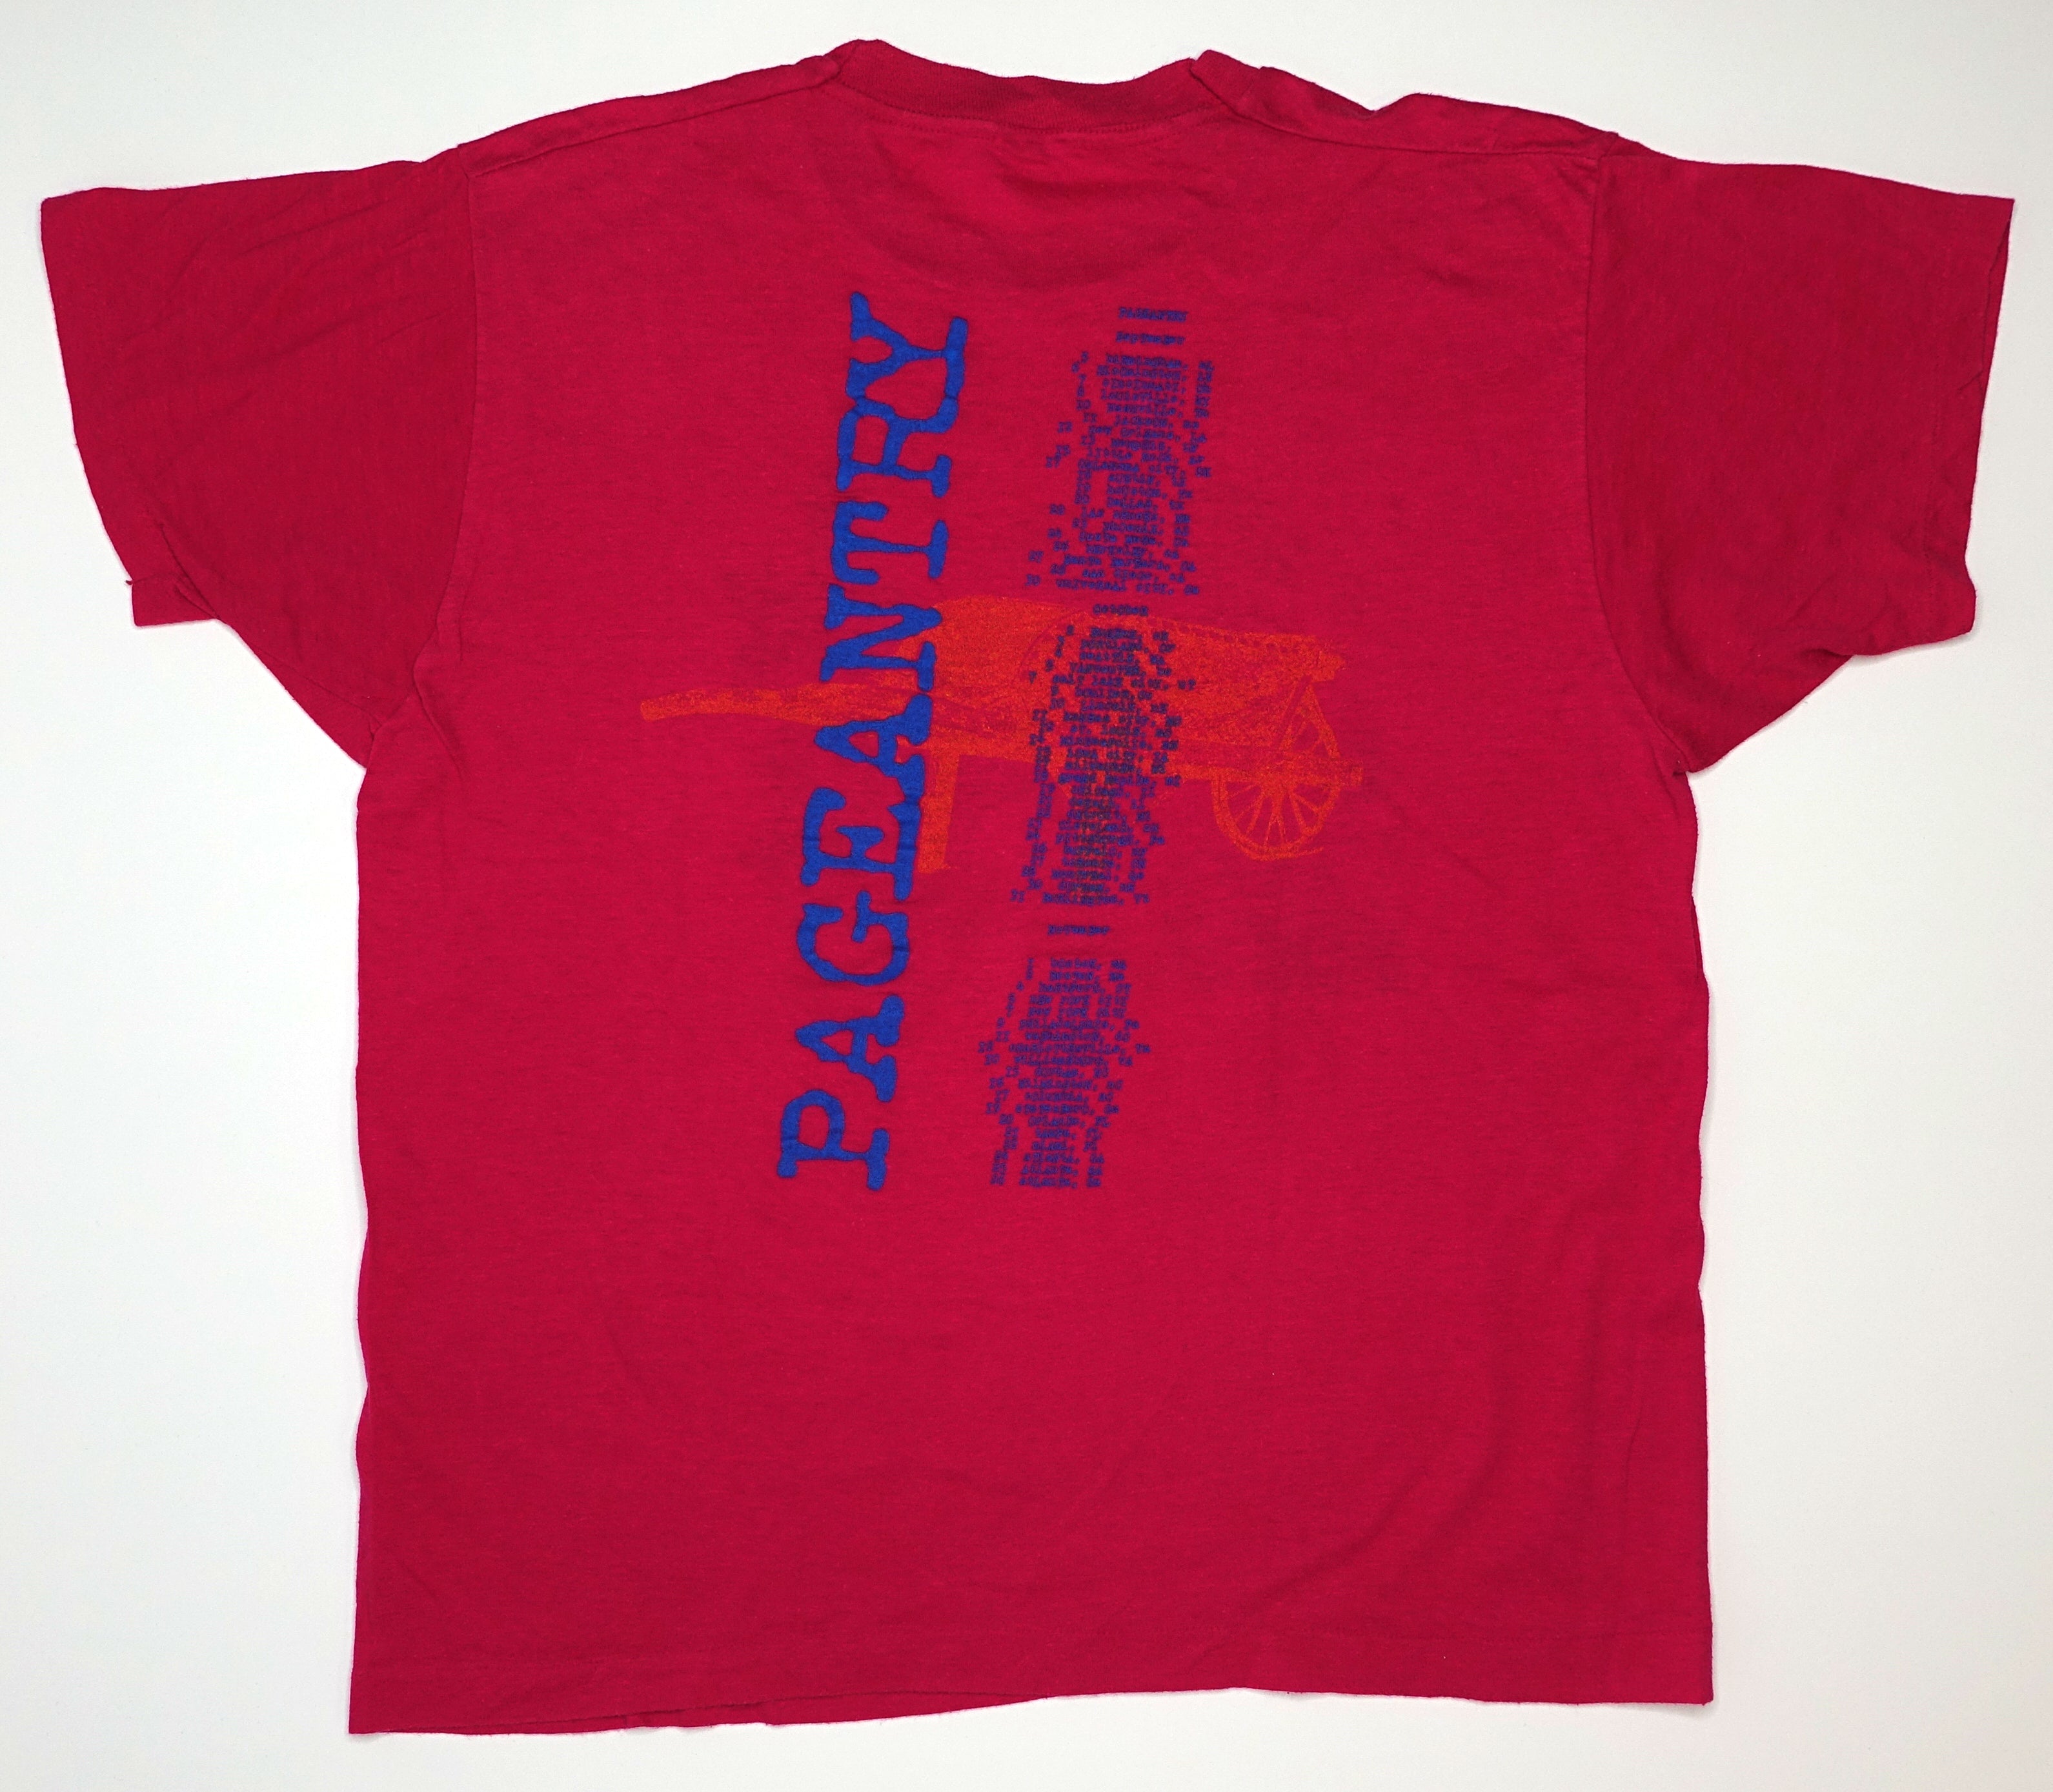 R.E.M. ‎– Statue 1984 Tour Shirt Size Large